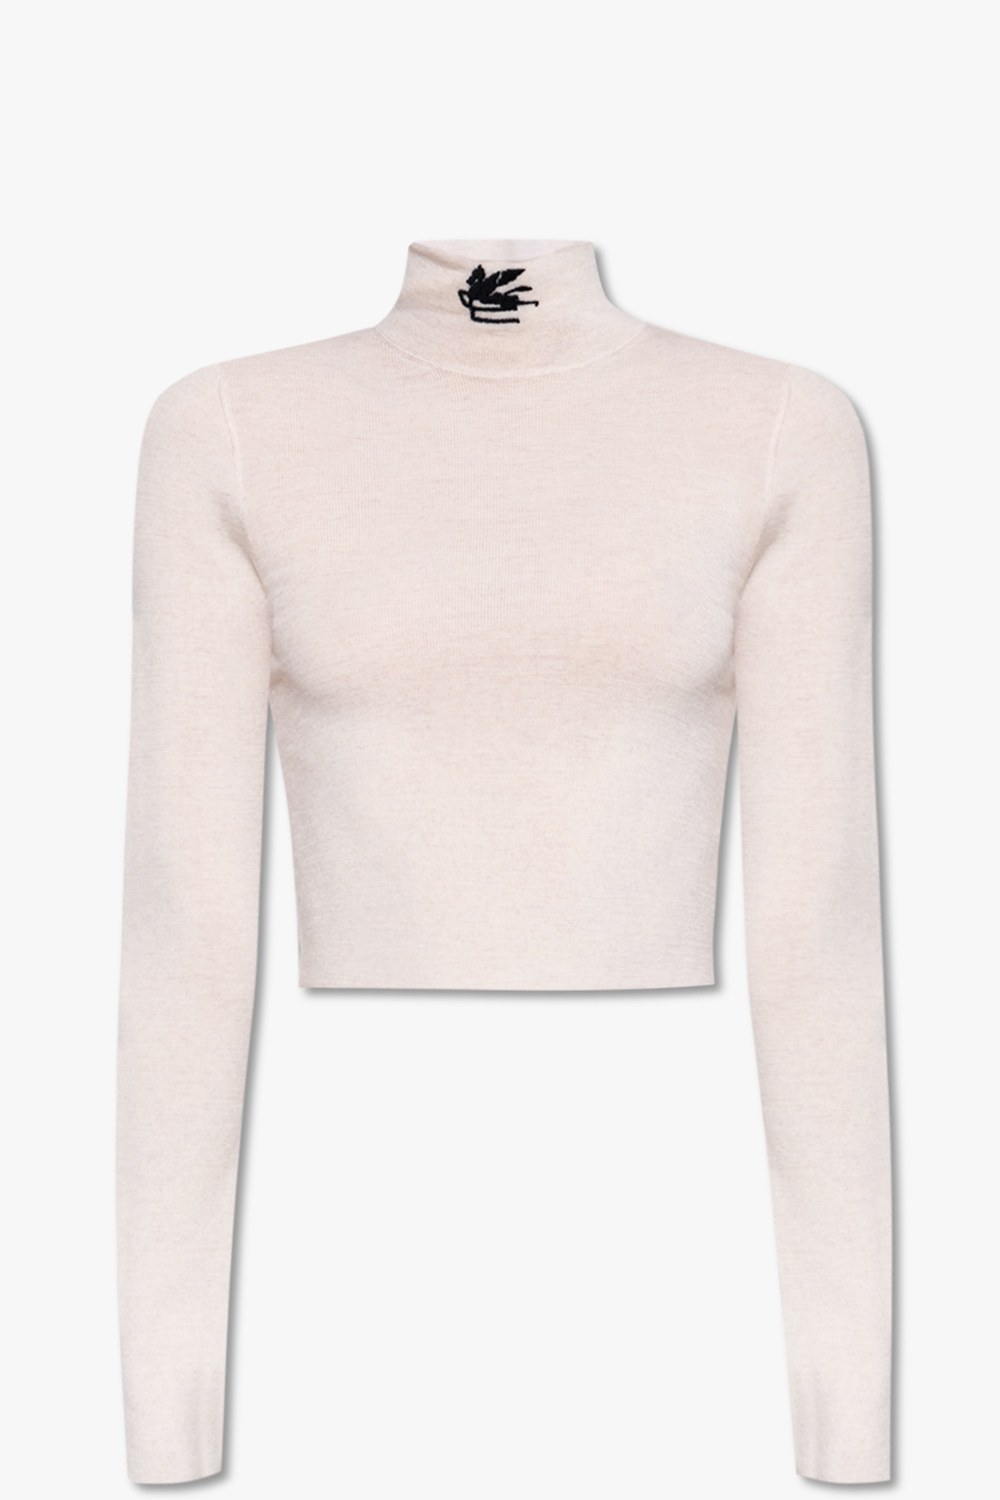 Etro Bella Hadid Cozies Up in Cutout Sweater Dress